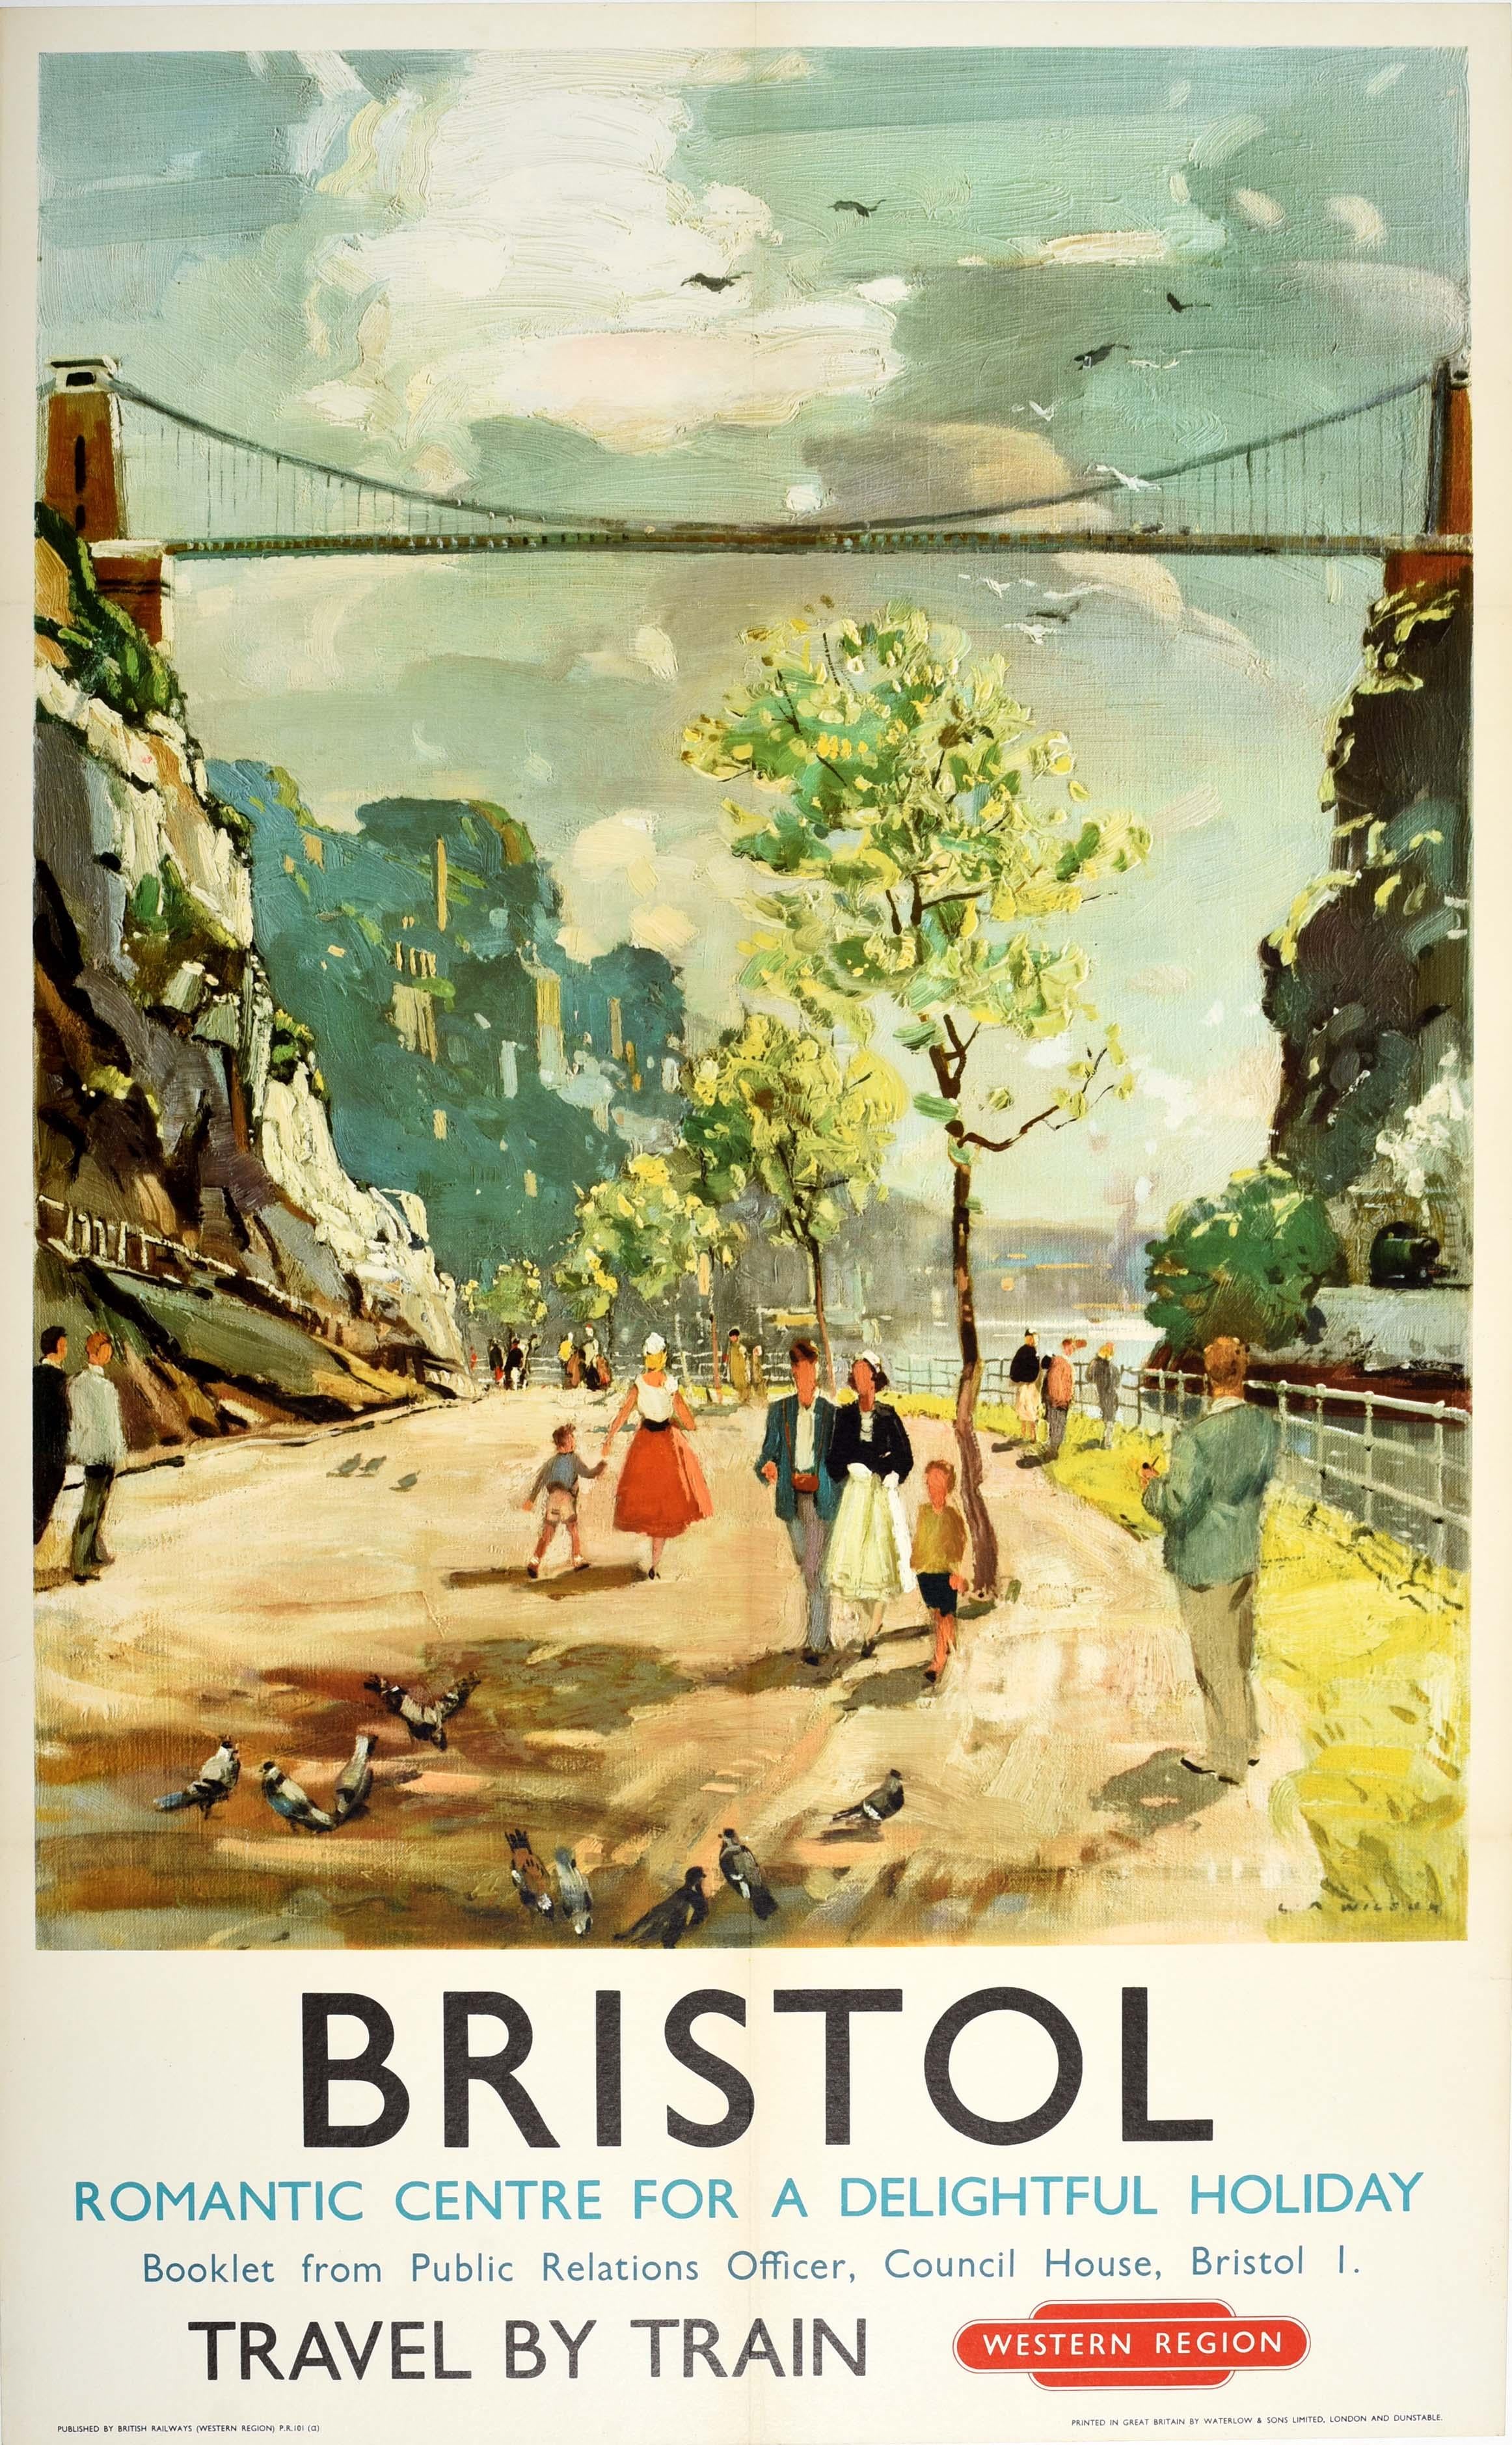 Leslie Arthur Wilcox Print - Original Vintage Railway Poster Bristol Romantic Centre For A Delightful Holiday